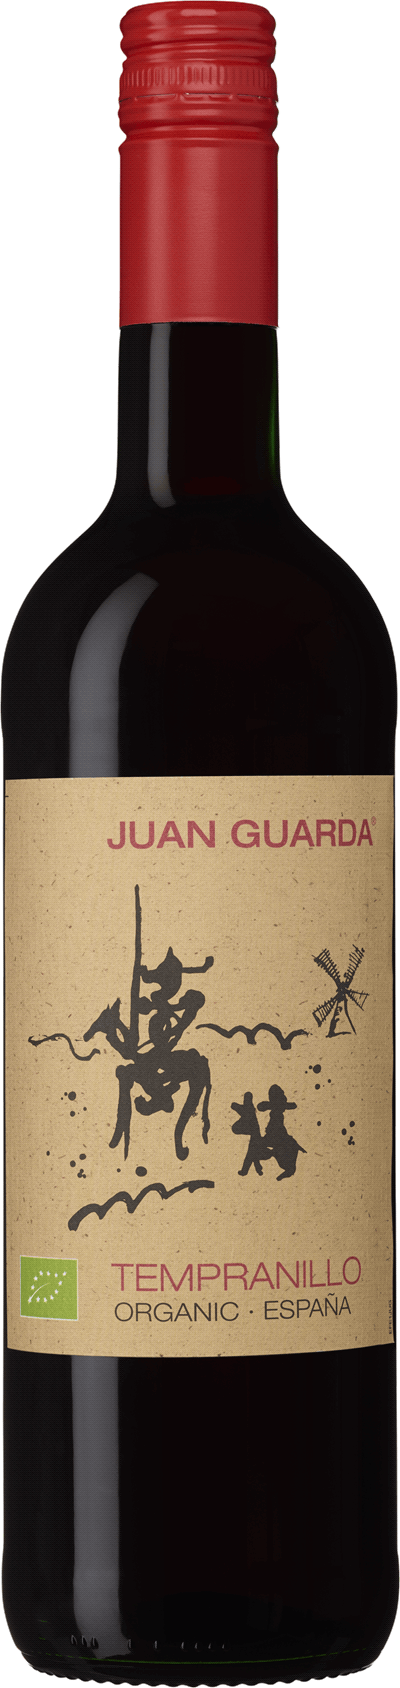 Juan Guarda Tempranillo 2019, 750 cl, 65 kr - Cocktailguiden